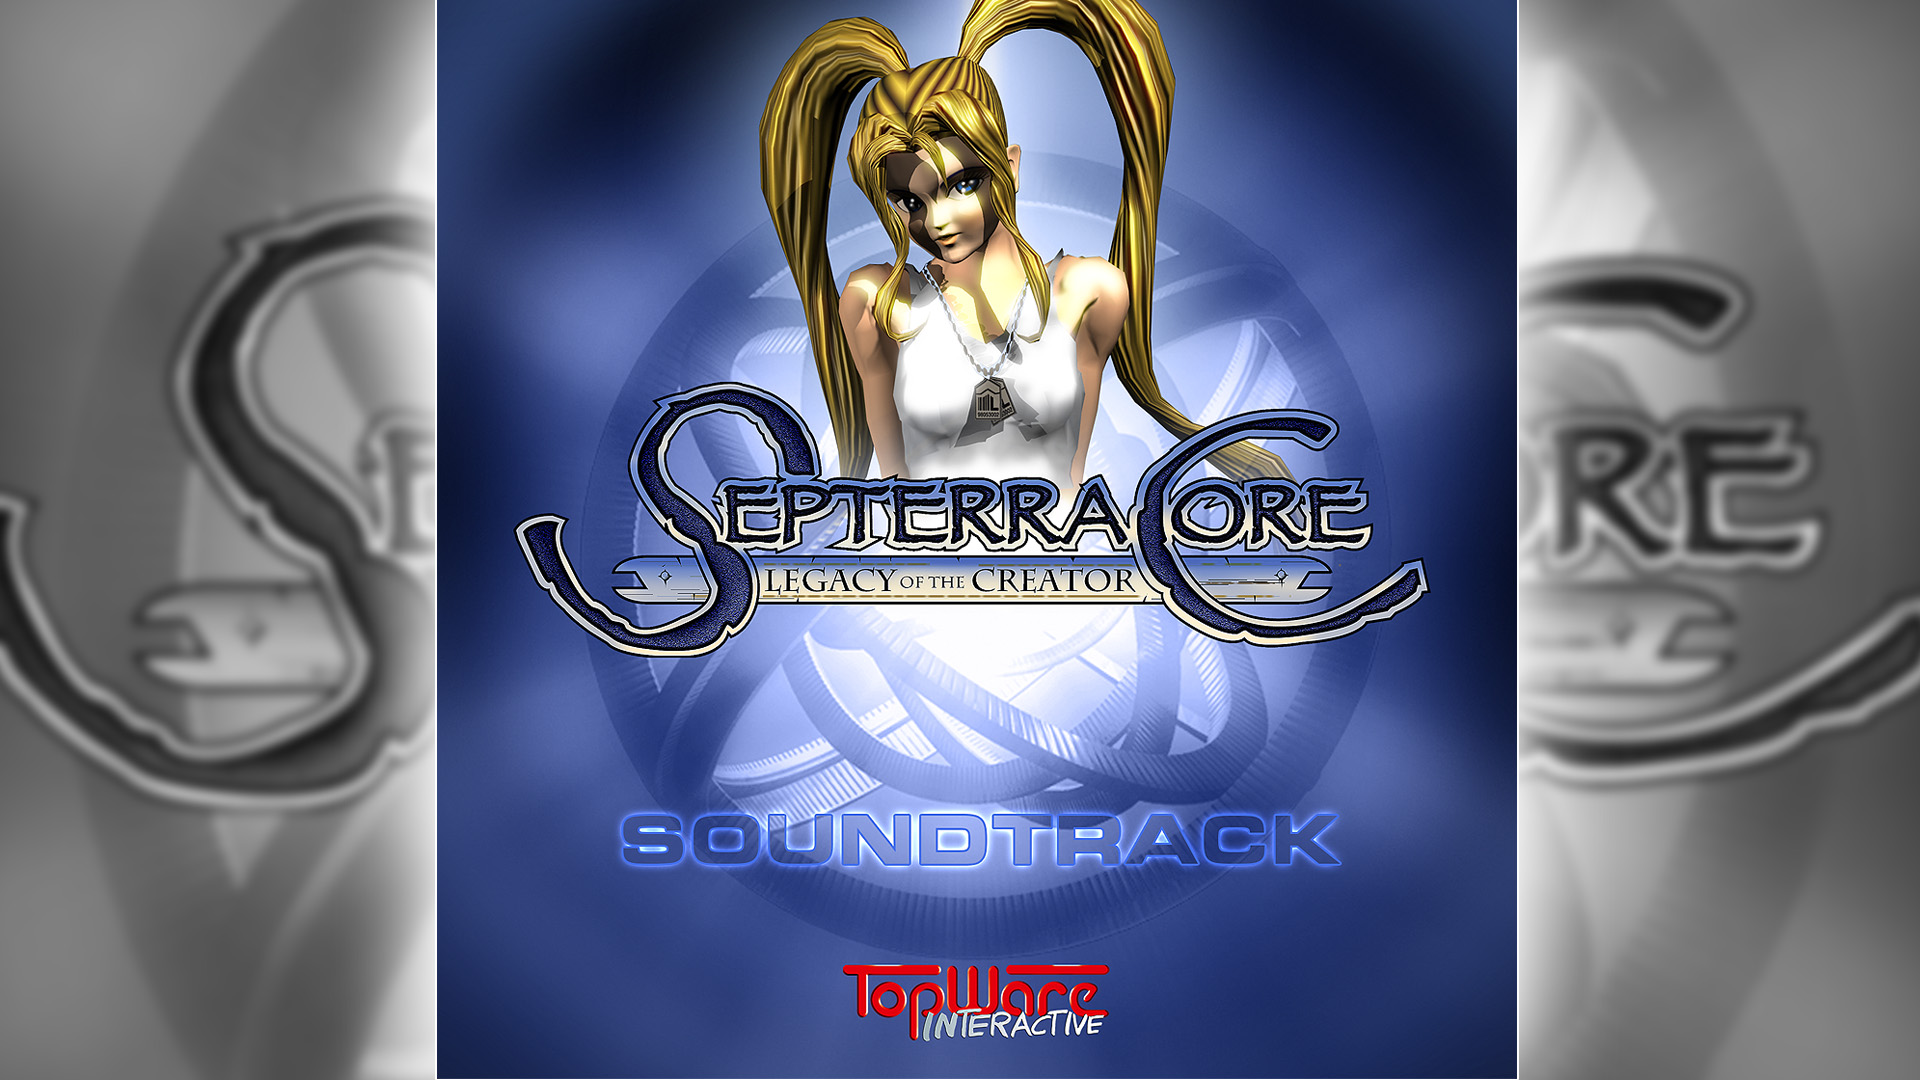 Septerra Core - Soundtrack screenshot